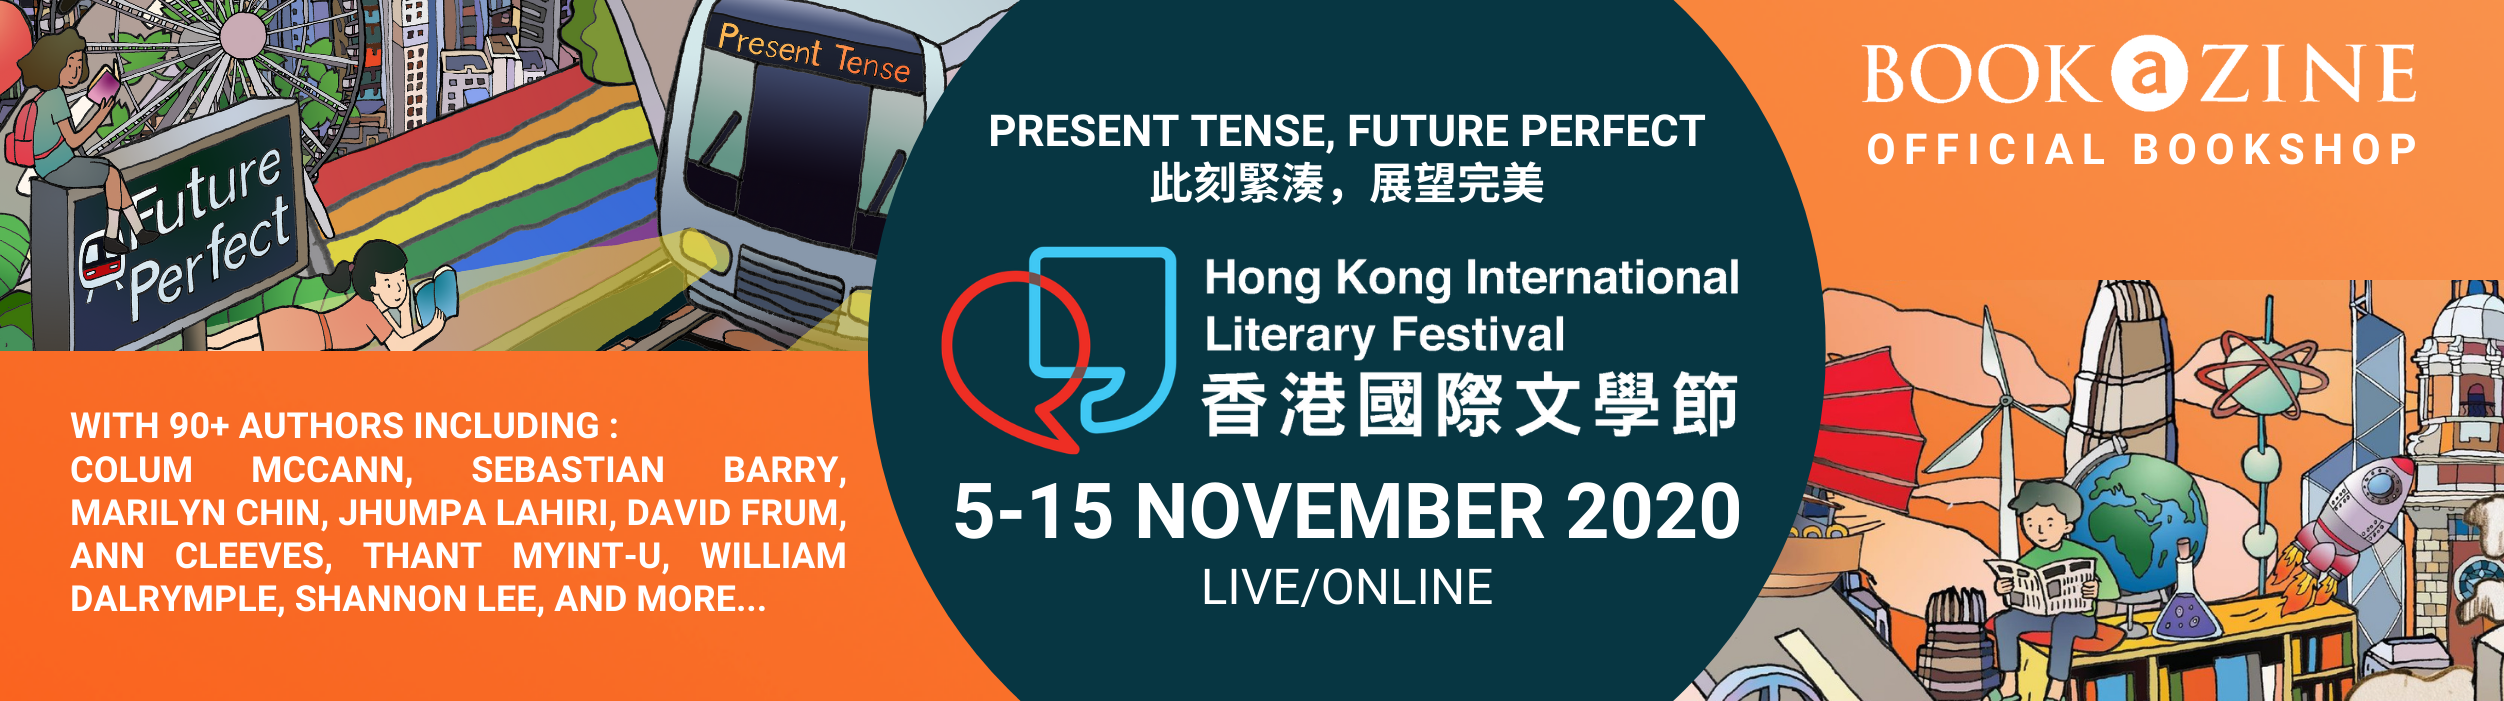 Gear Up for the Hong Kong International Literary Festival